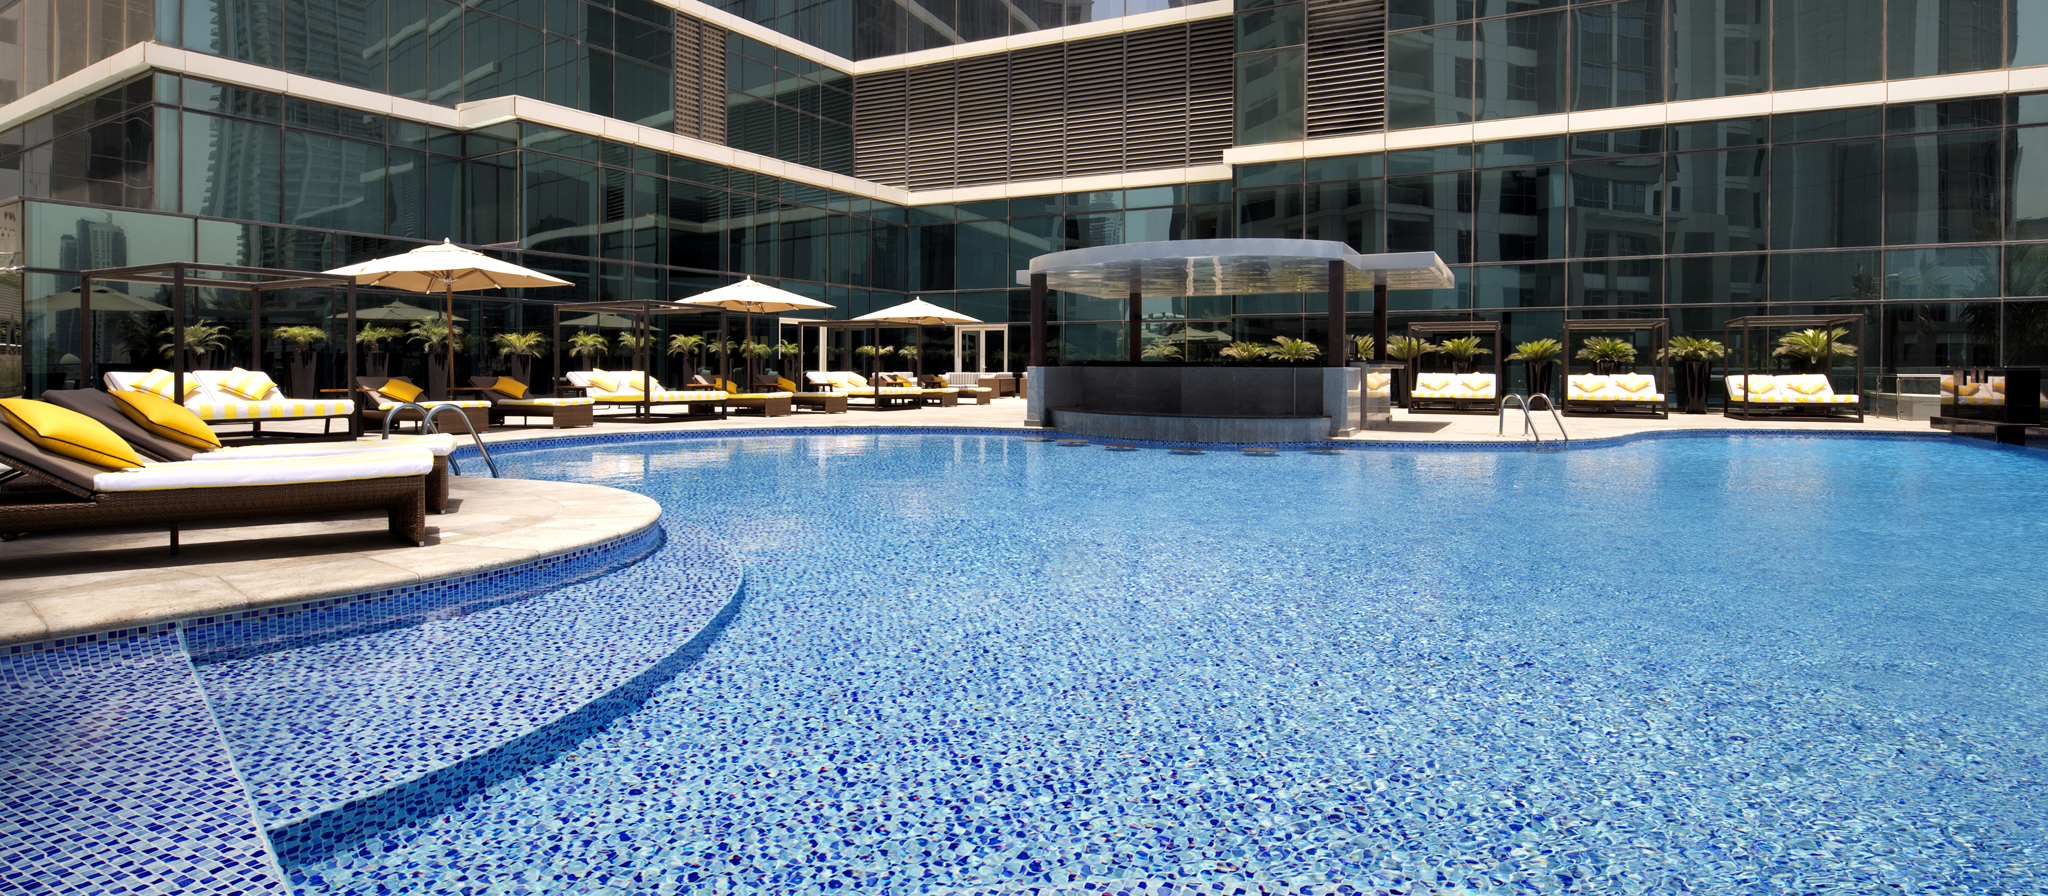 Hotels in Dubai, Dubai Hotel Booking, Al Nahdi Travels & Tourism hotel booking online